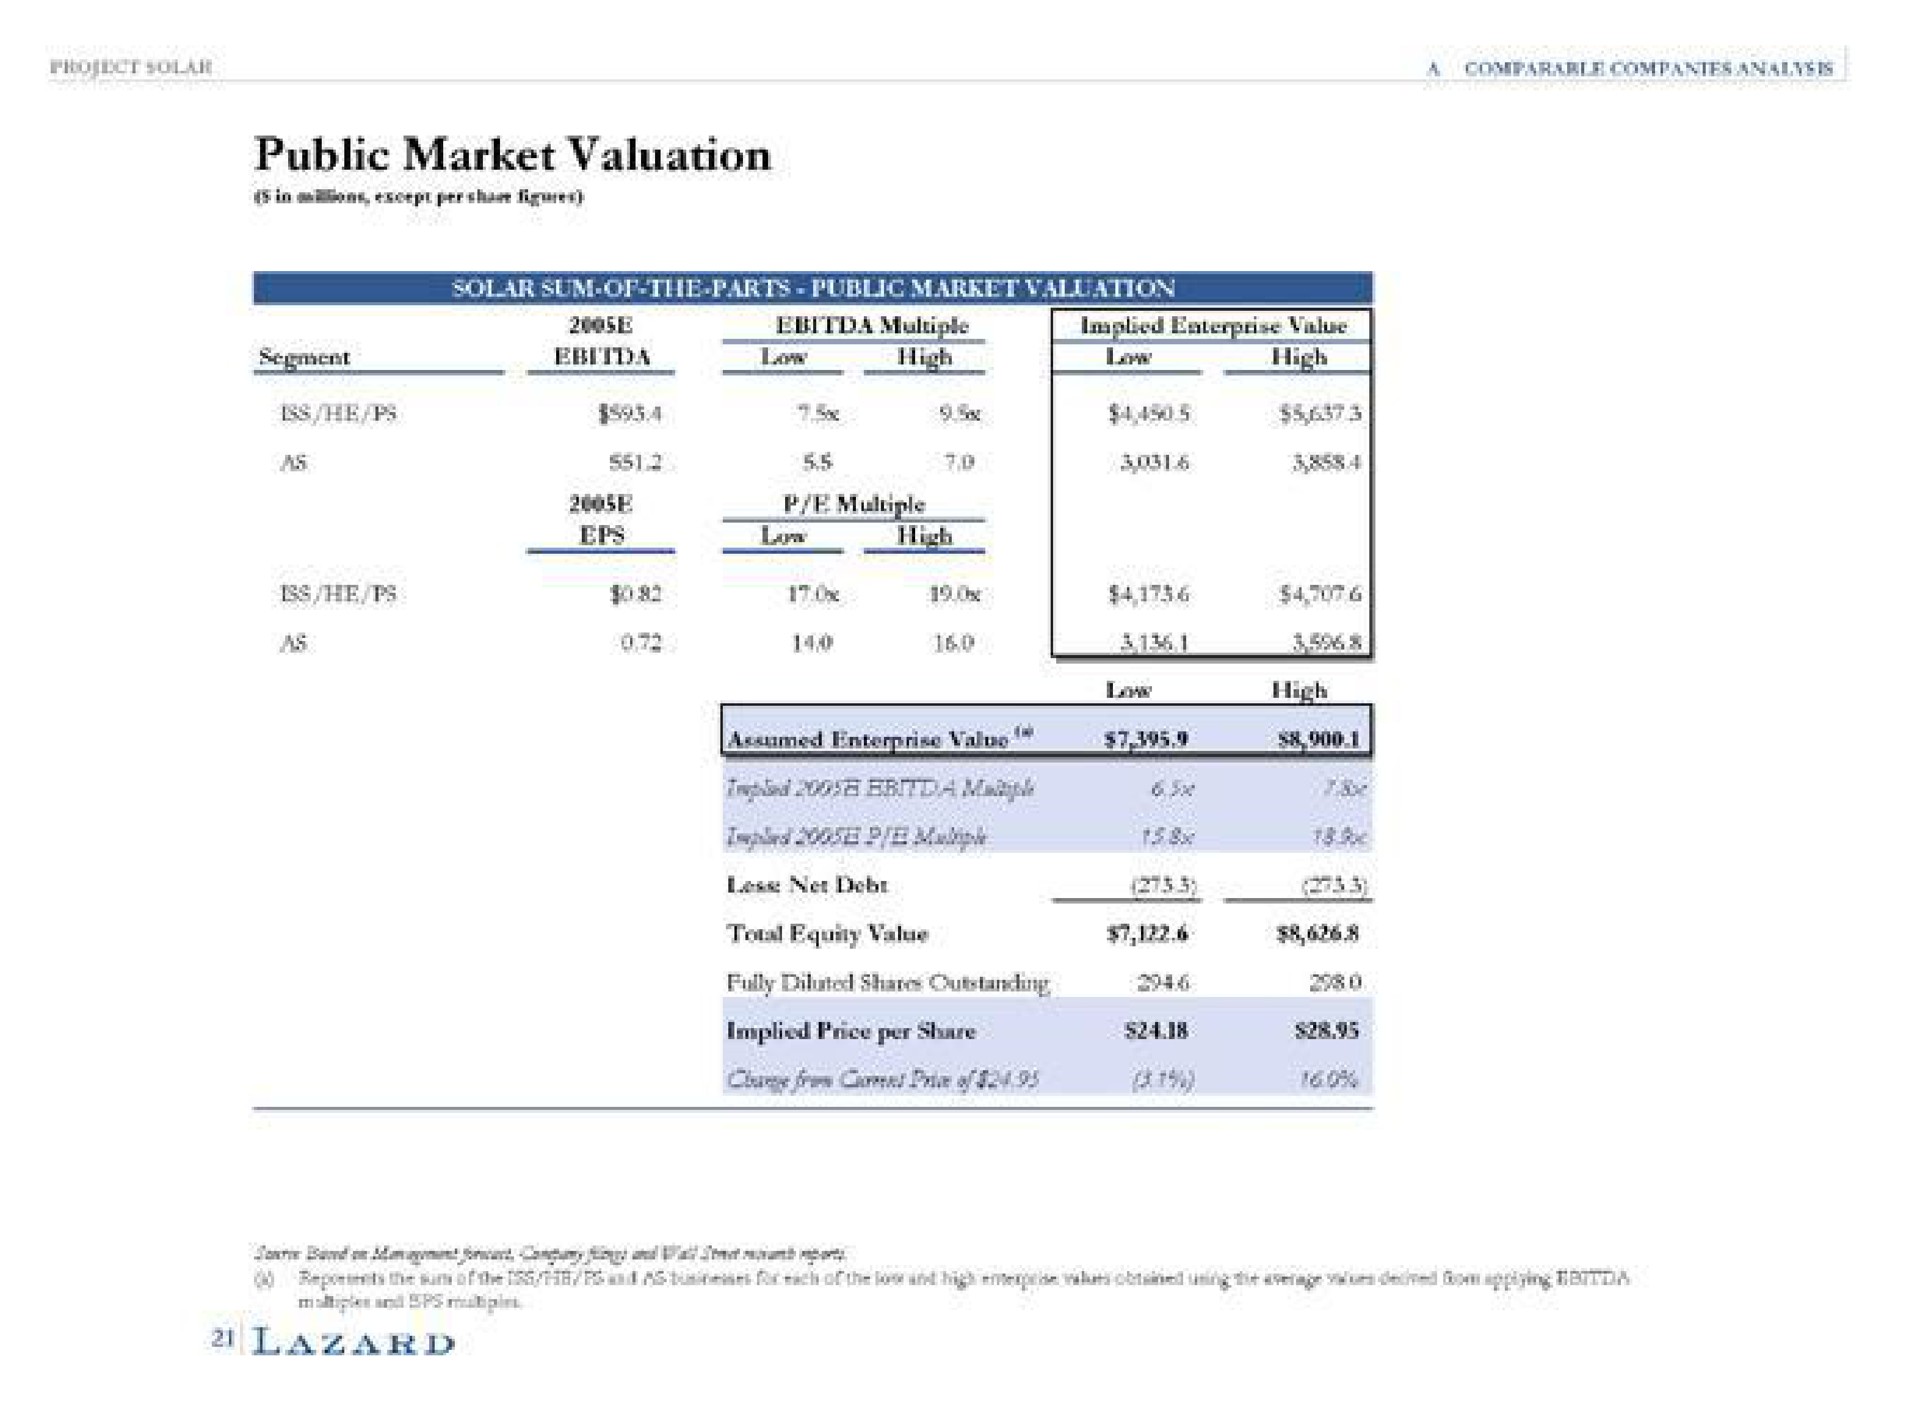 public market valuation | Lazard